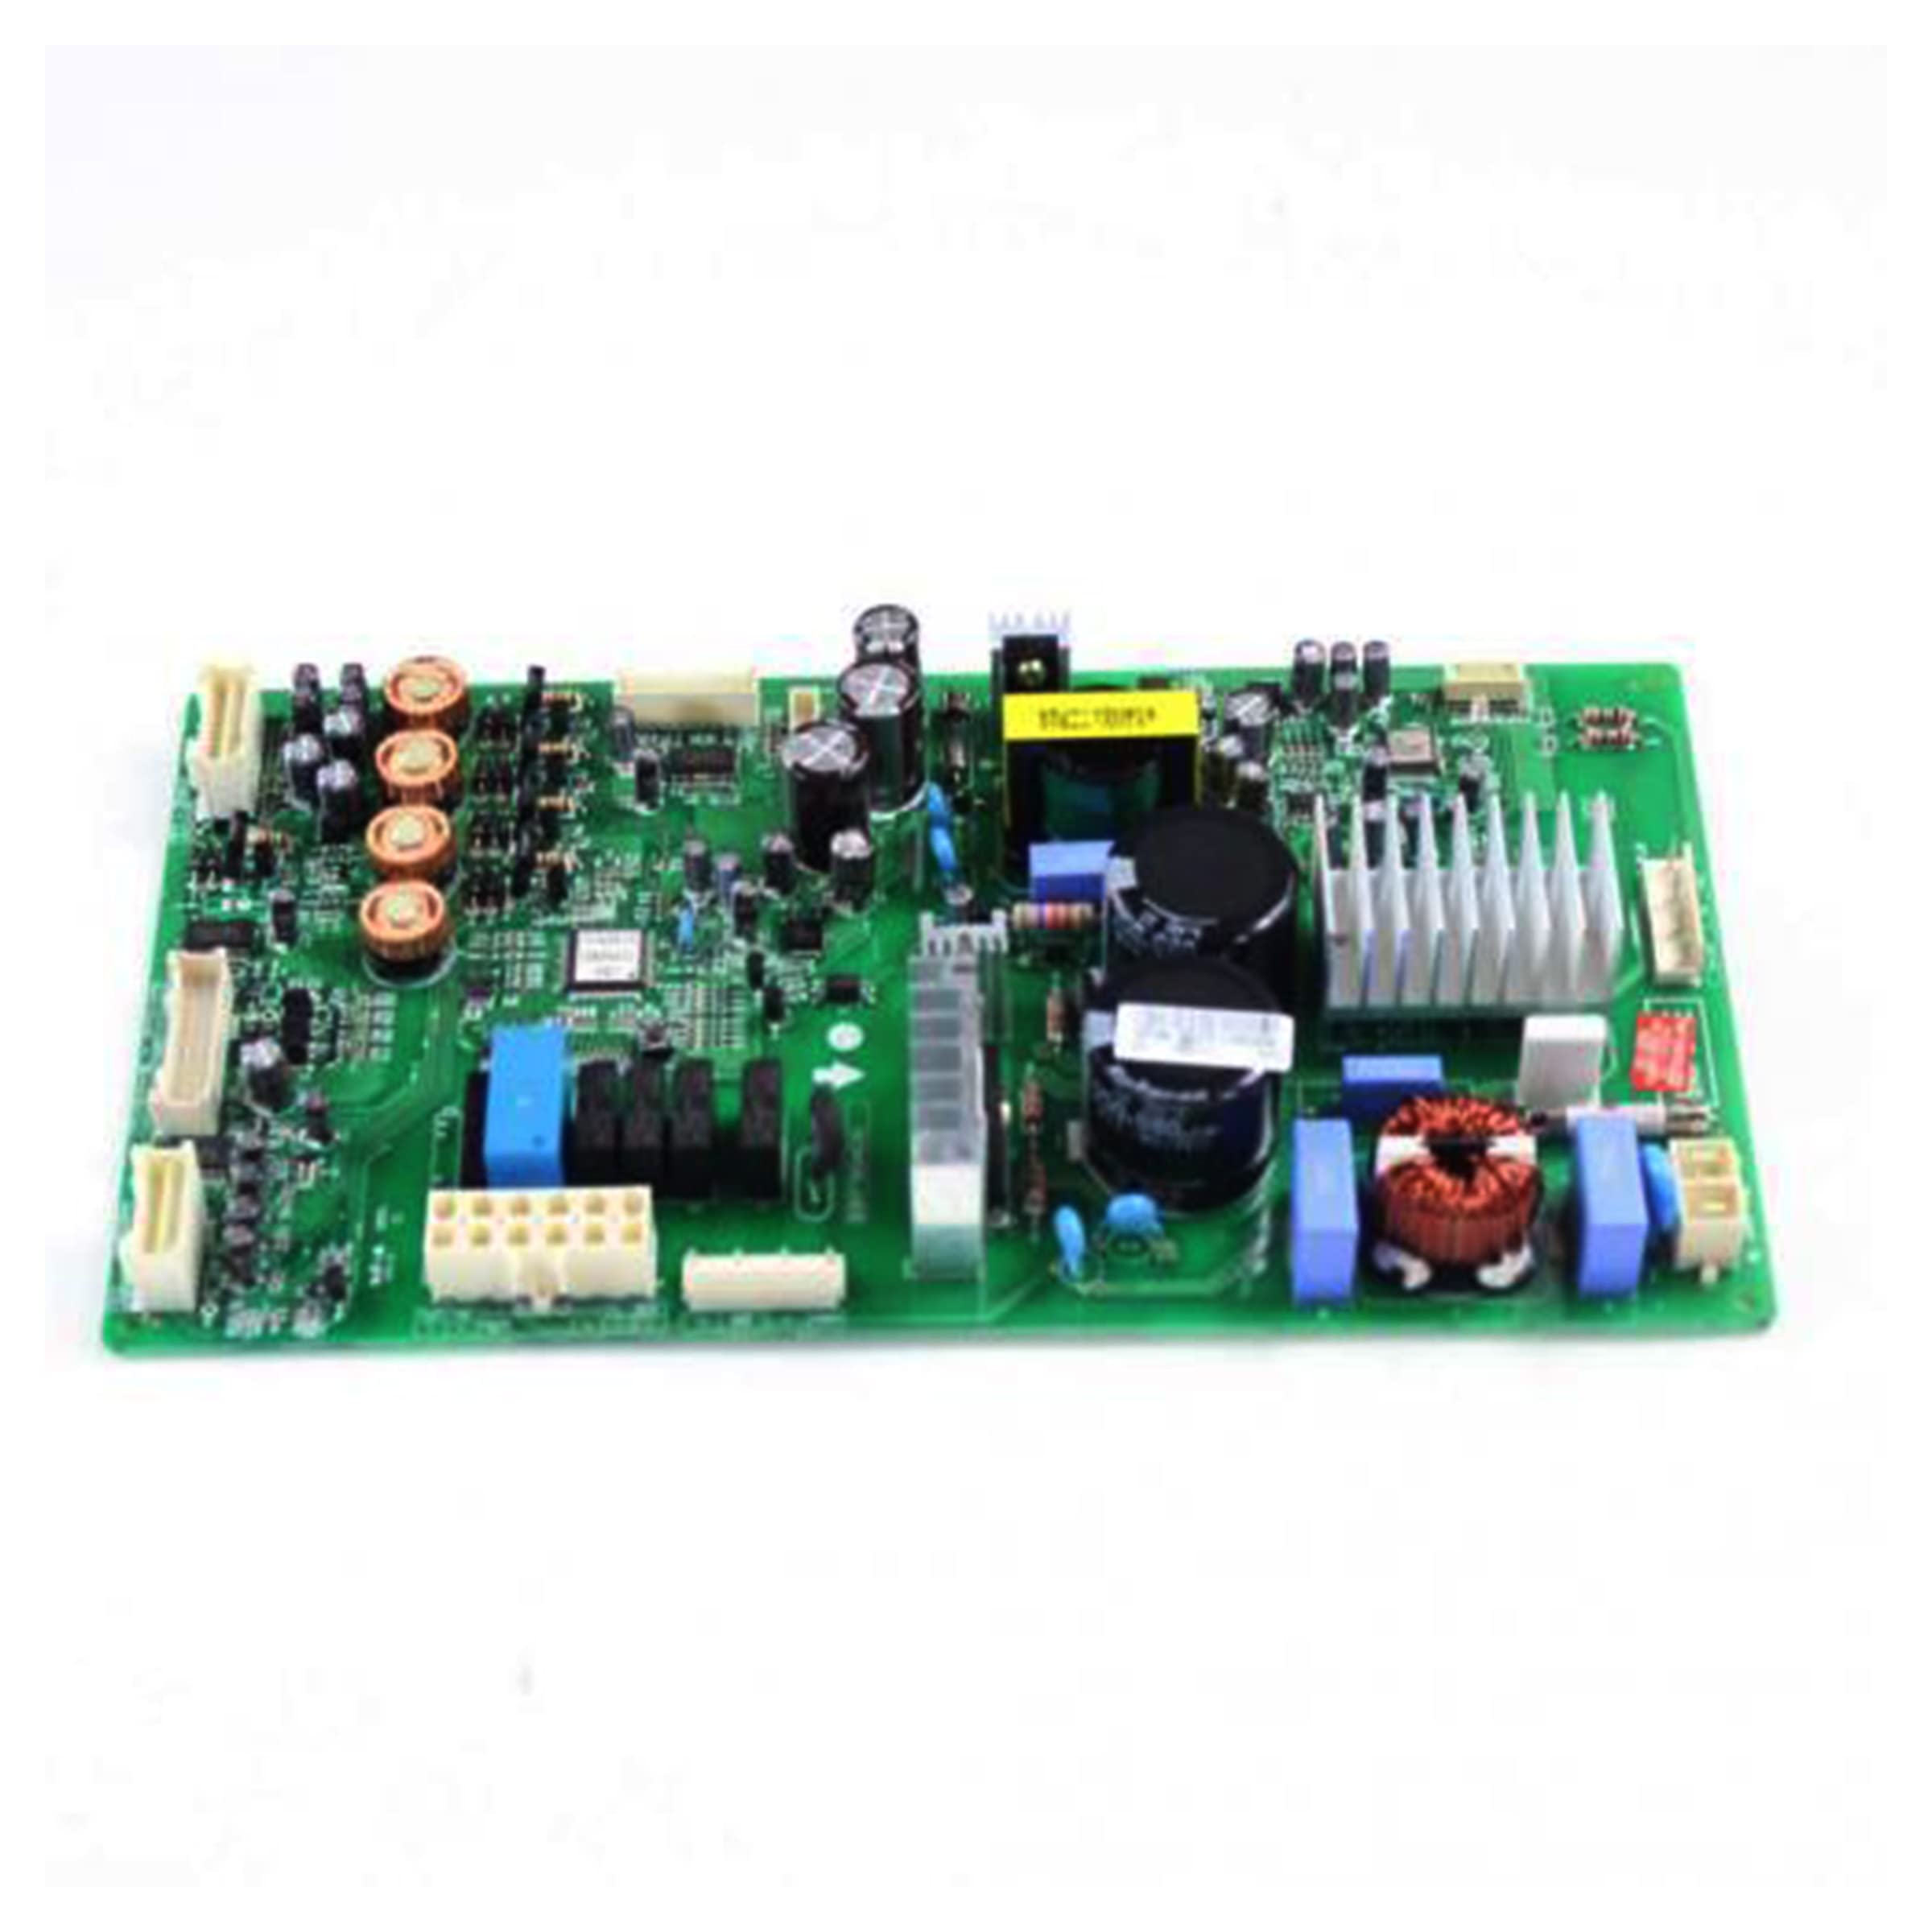 LG Refrigerator Power Control Board. Part #CSP30021030